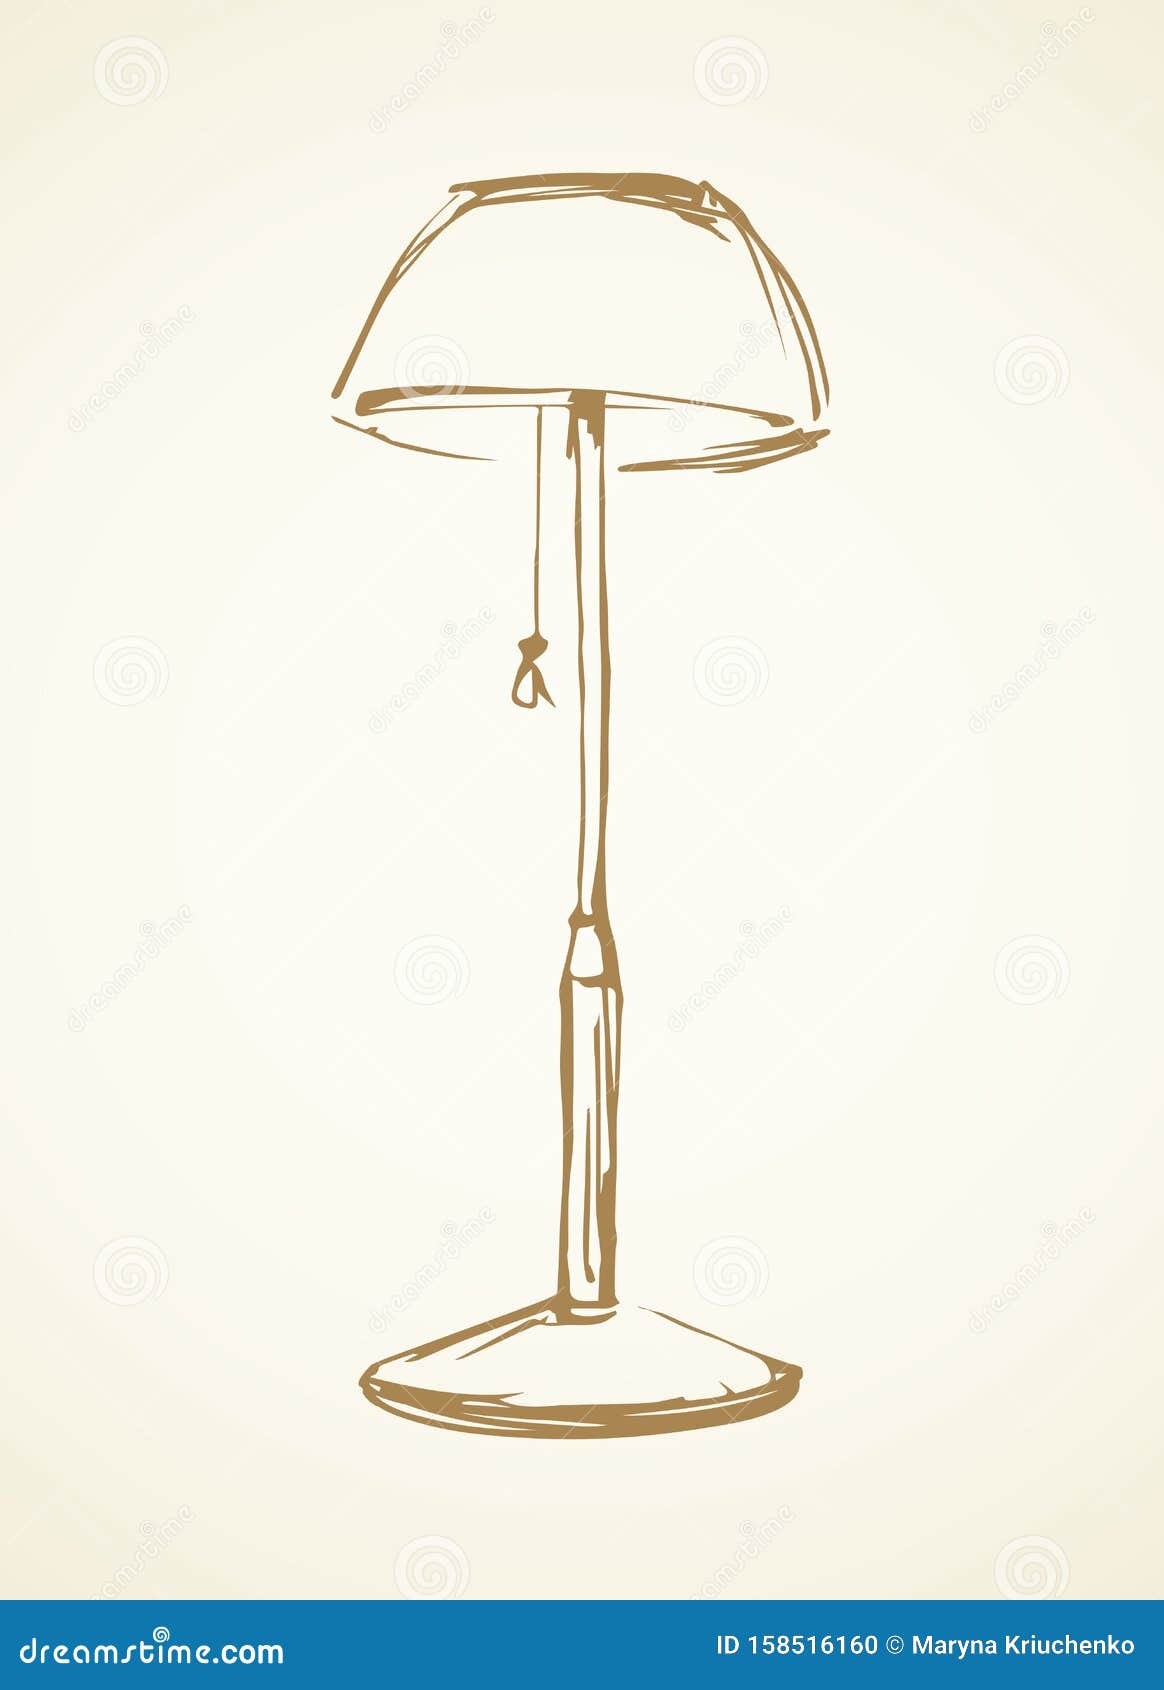 love this lamp by Pen  Gravy  Antique lamp shades Painting lamp shades  Small lamp shades